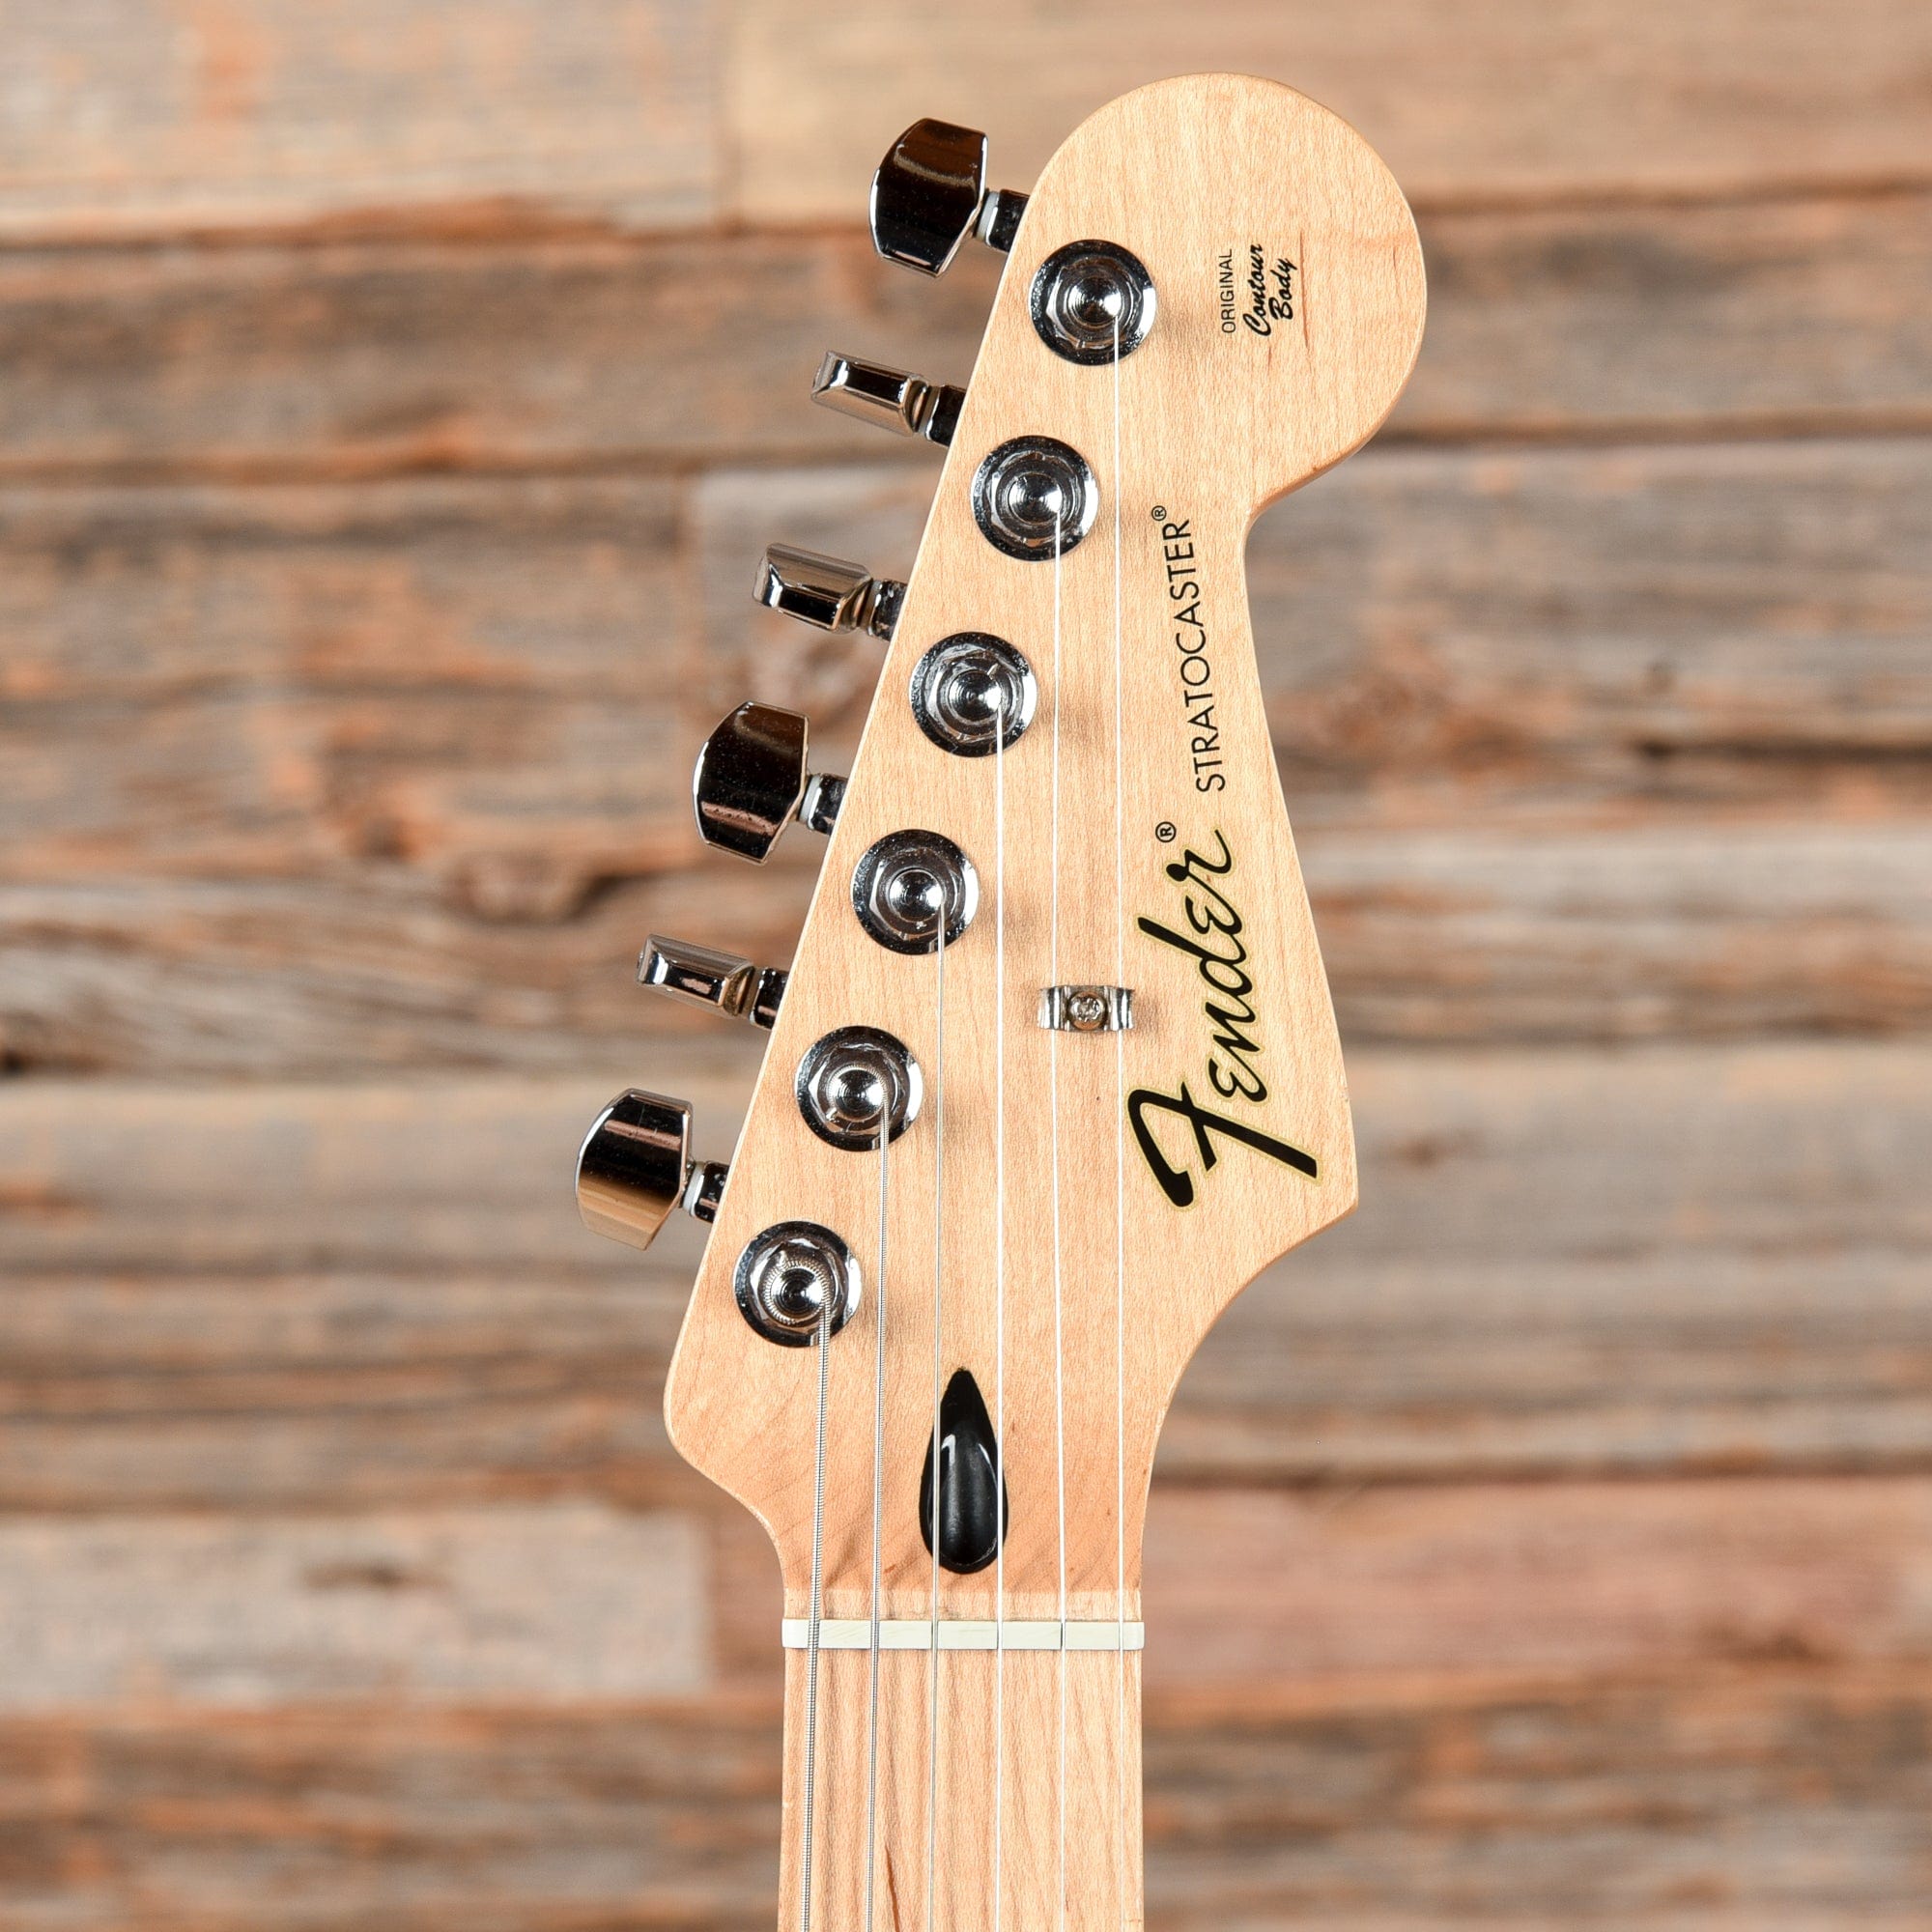 Fender Standard Stratocaster Black 2018 Electric Guitars / Solid Body